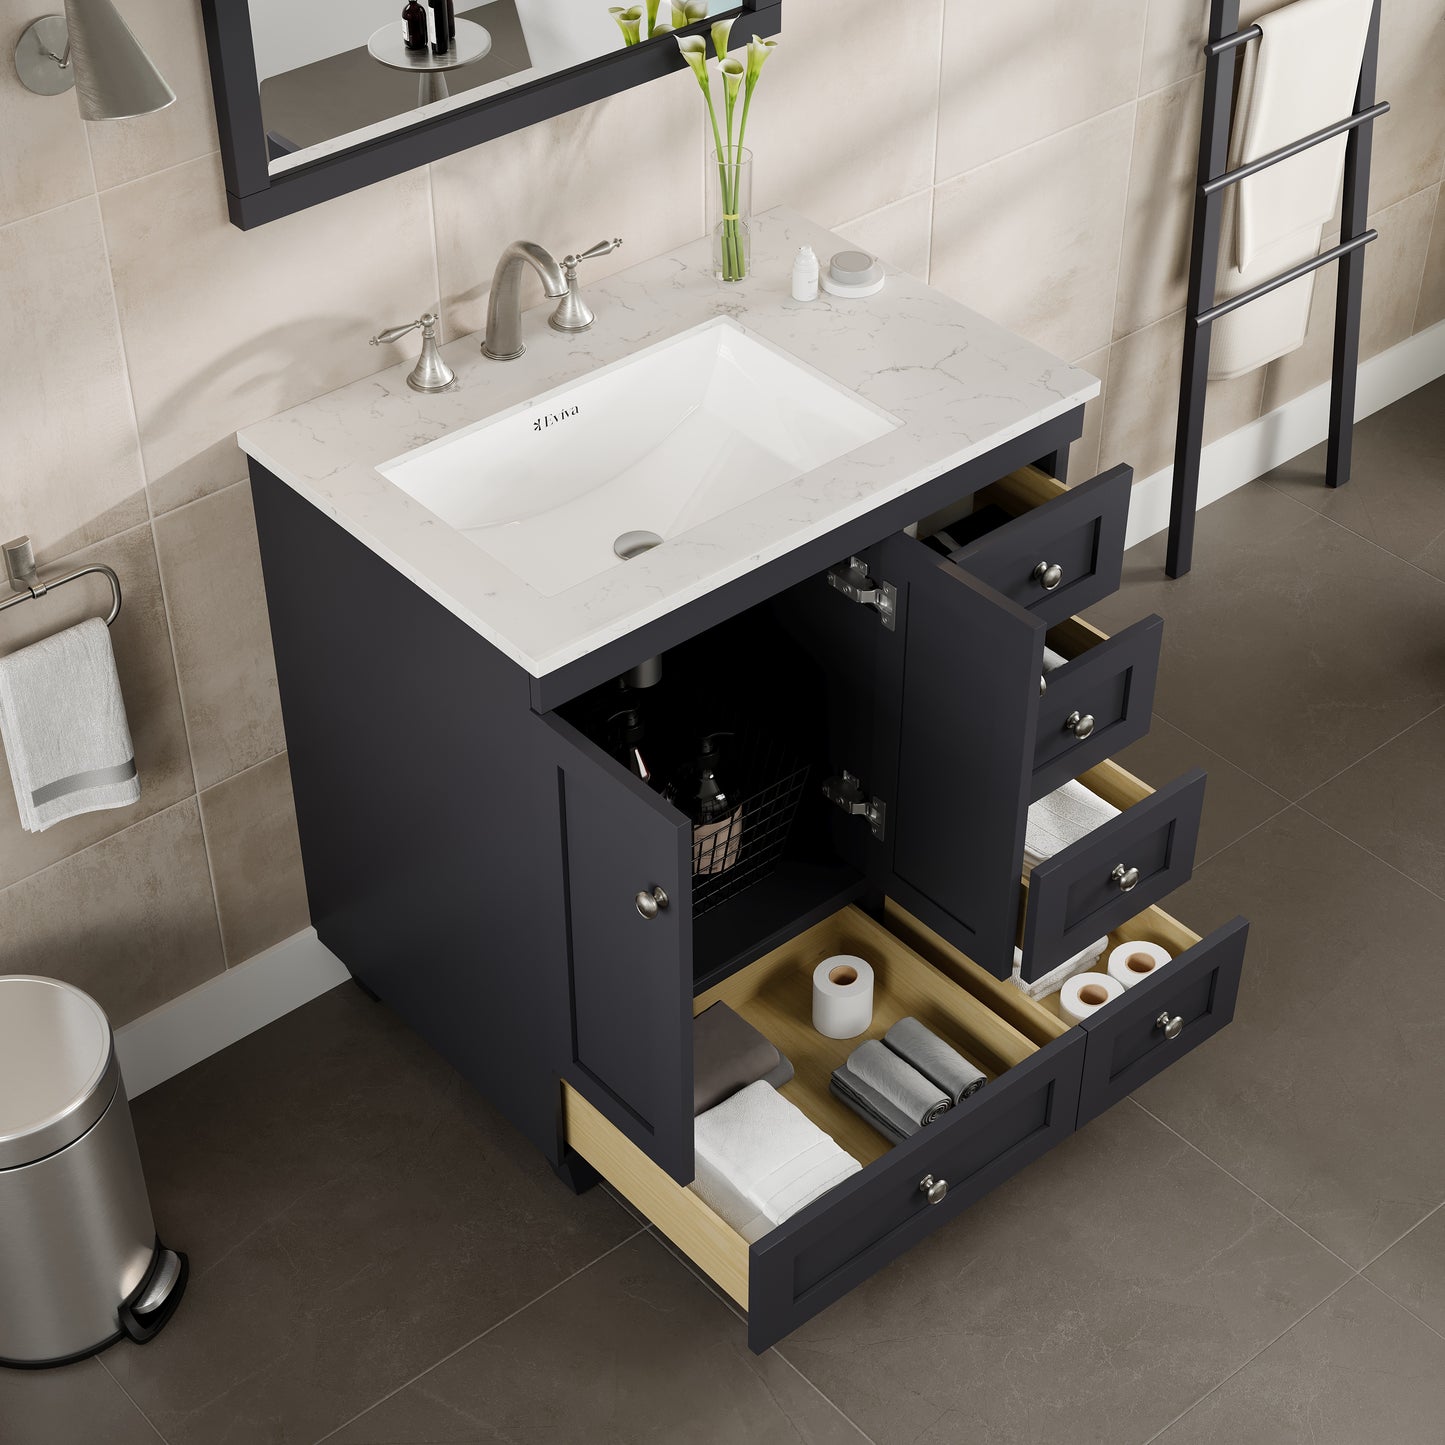 Acclaim 30"W x 22"D Dark Gray Bathroom Vanity with Carrara Quartz Countertop and Undermount Porcelain Sink